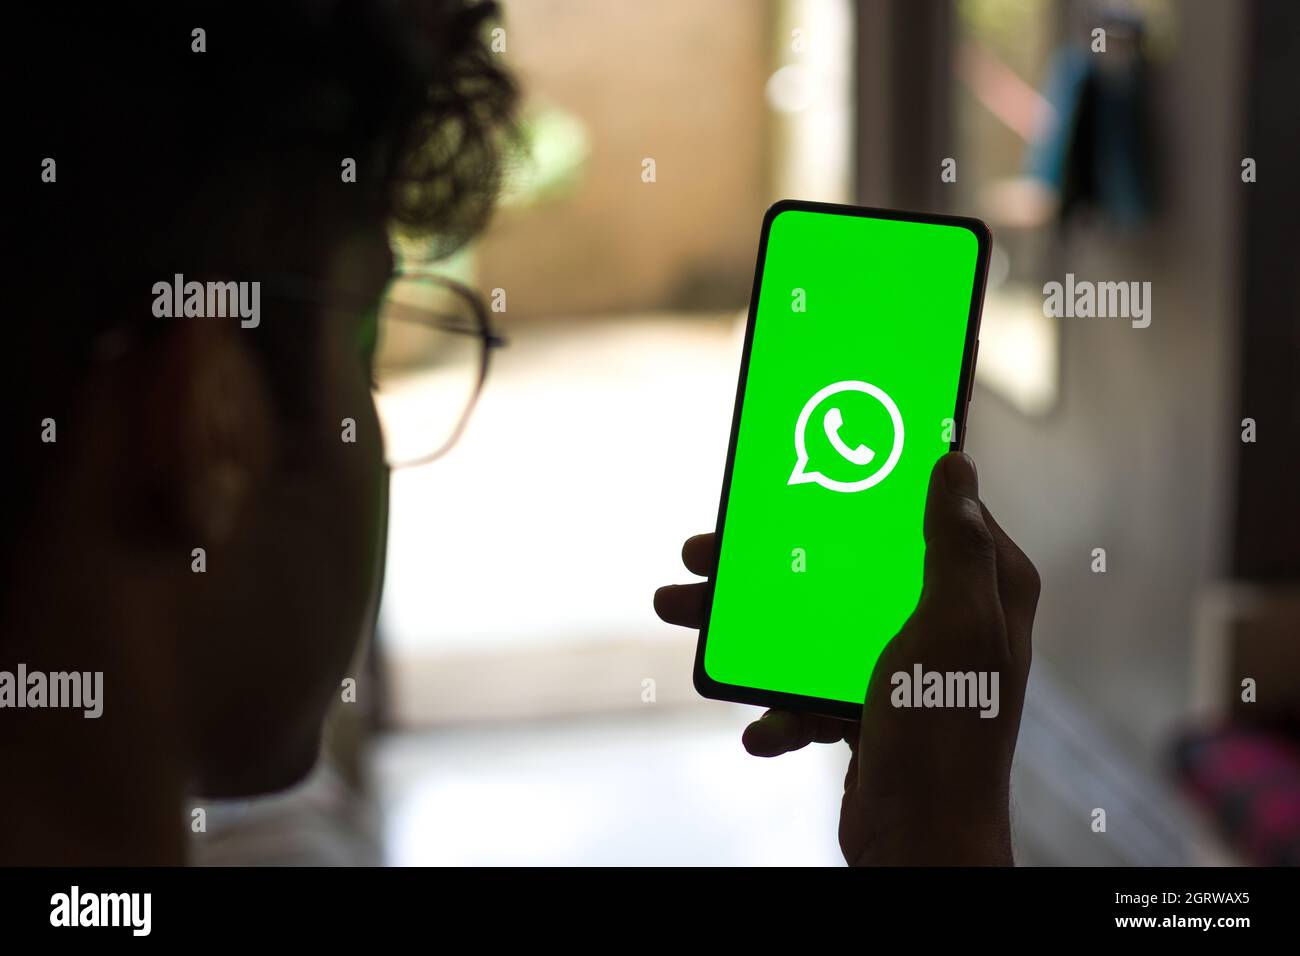 West Bangal, India - September 28, 2021 : WhatsApp logo on phone screen stock image. Stock Photo